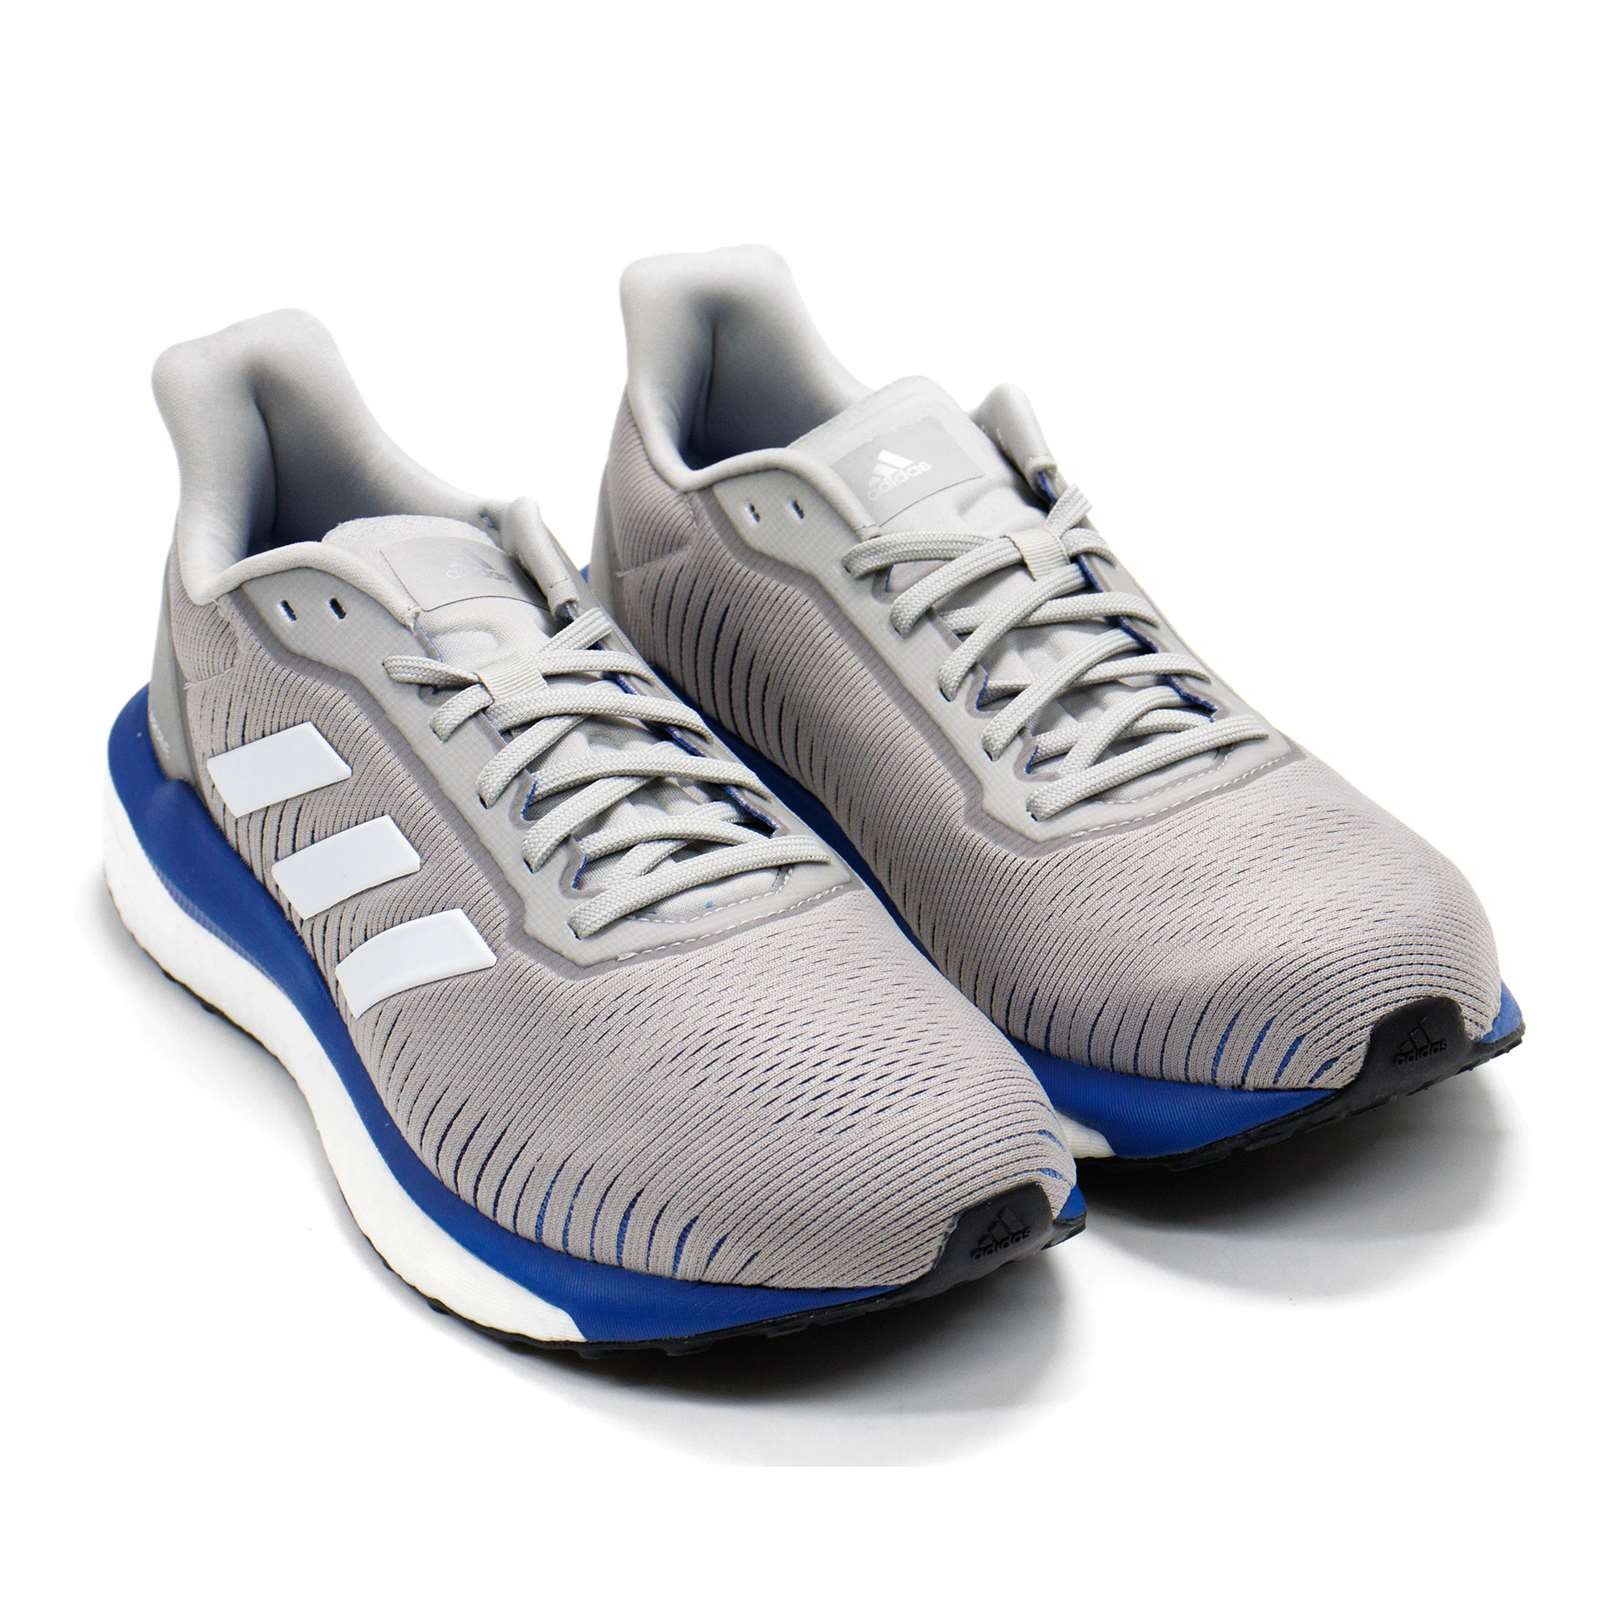 Adidas Solar Drive 19 Shoes